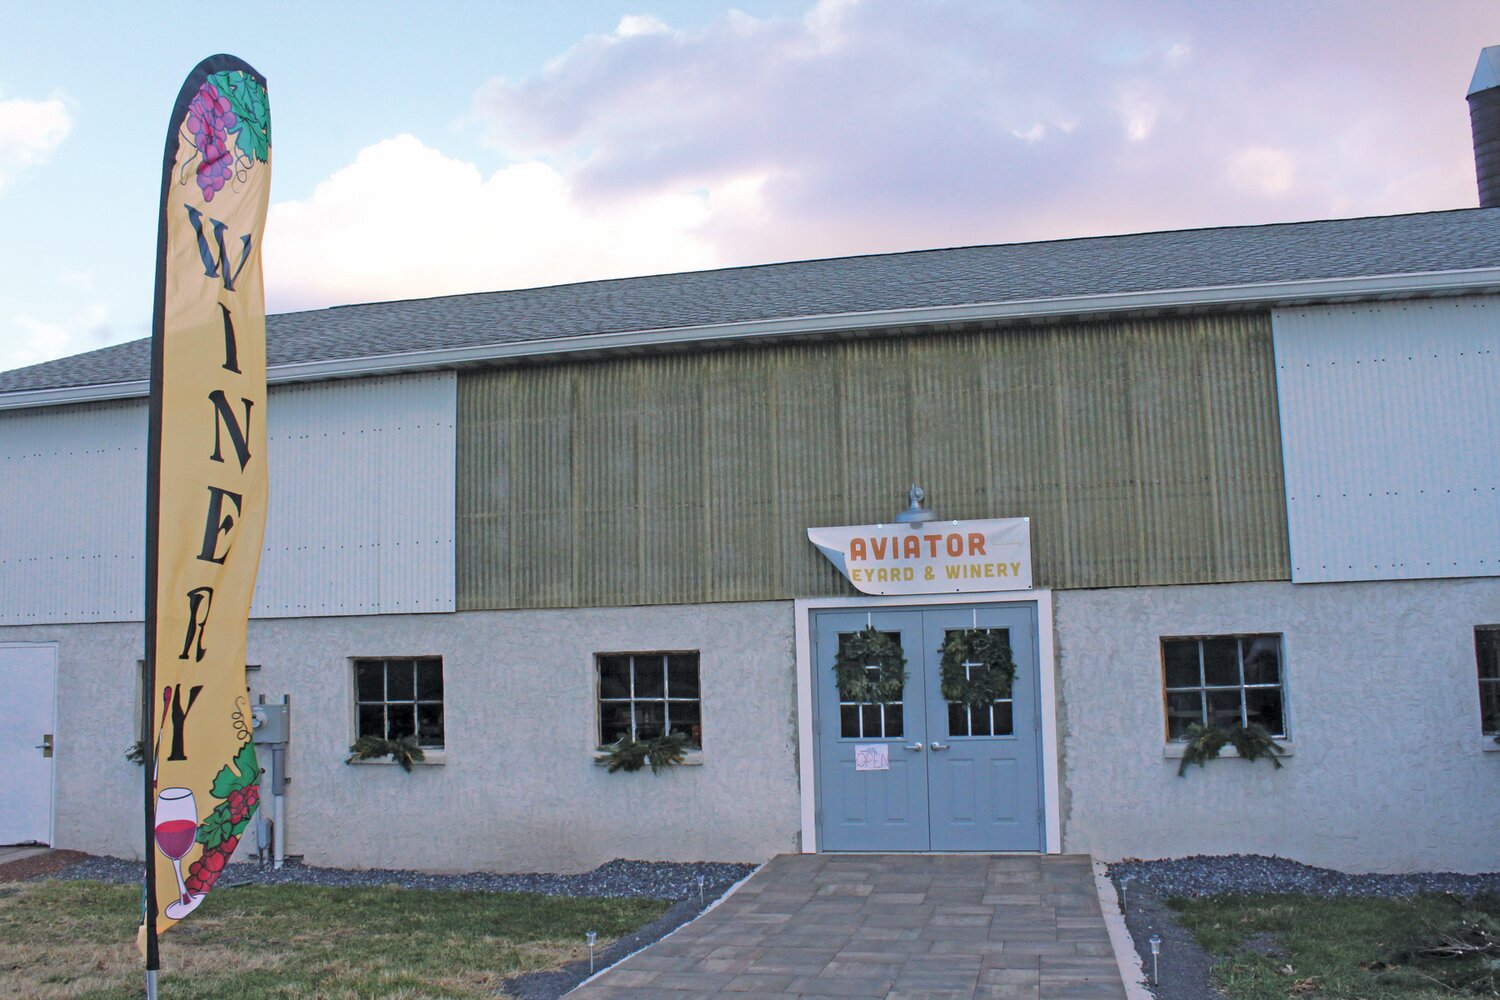 The Aviator Winery tasting room is located inside an airplane hangar.